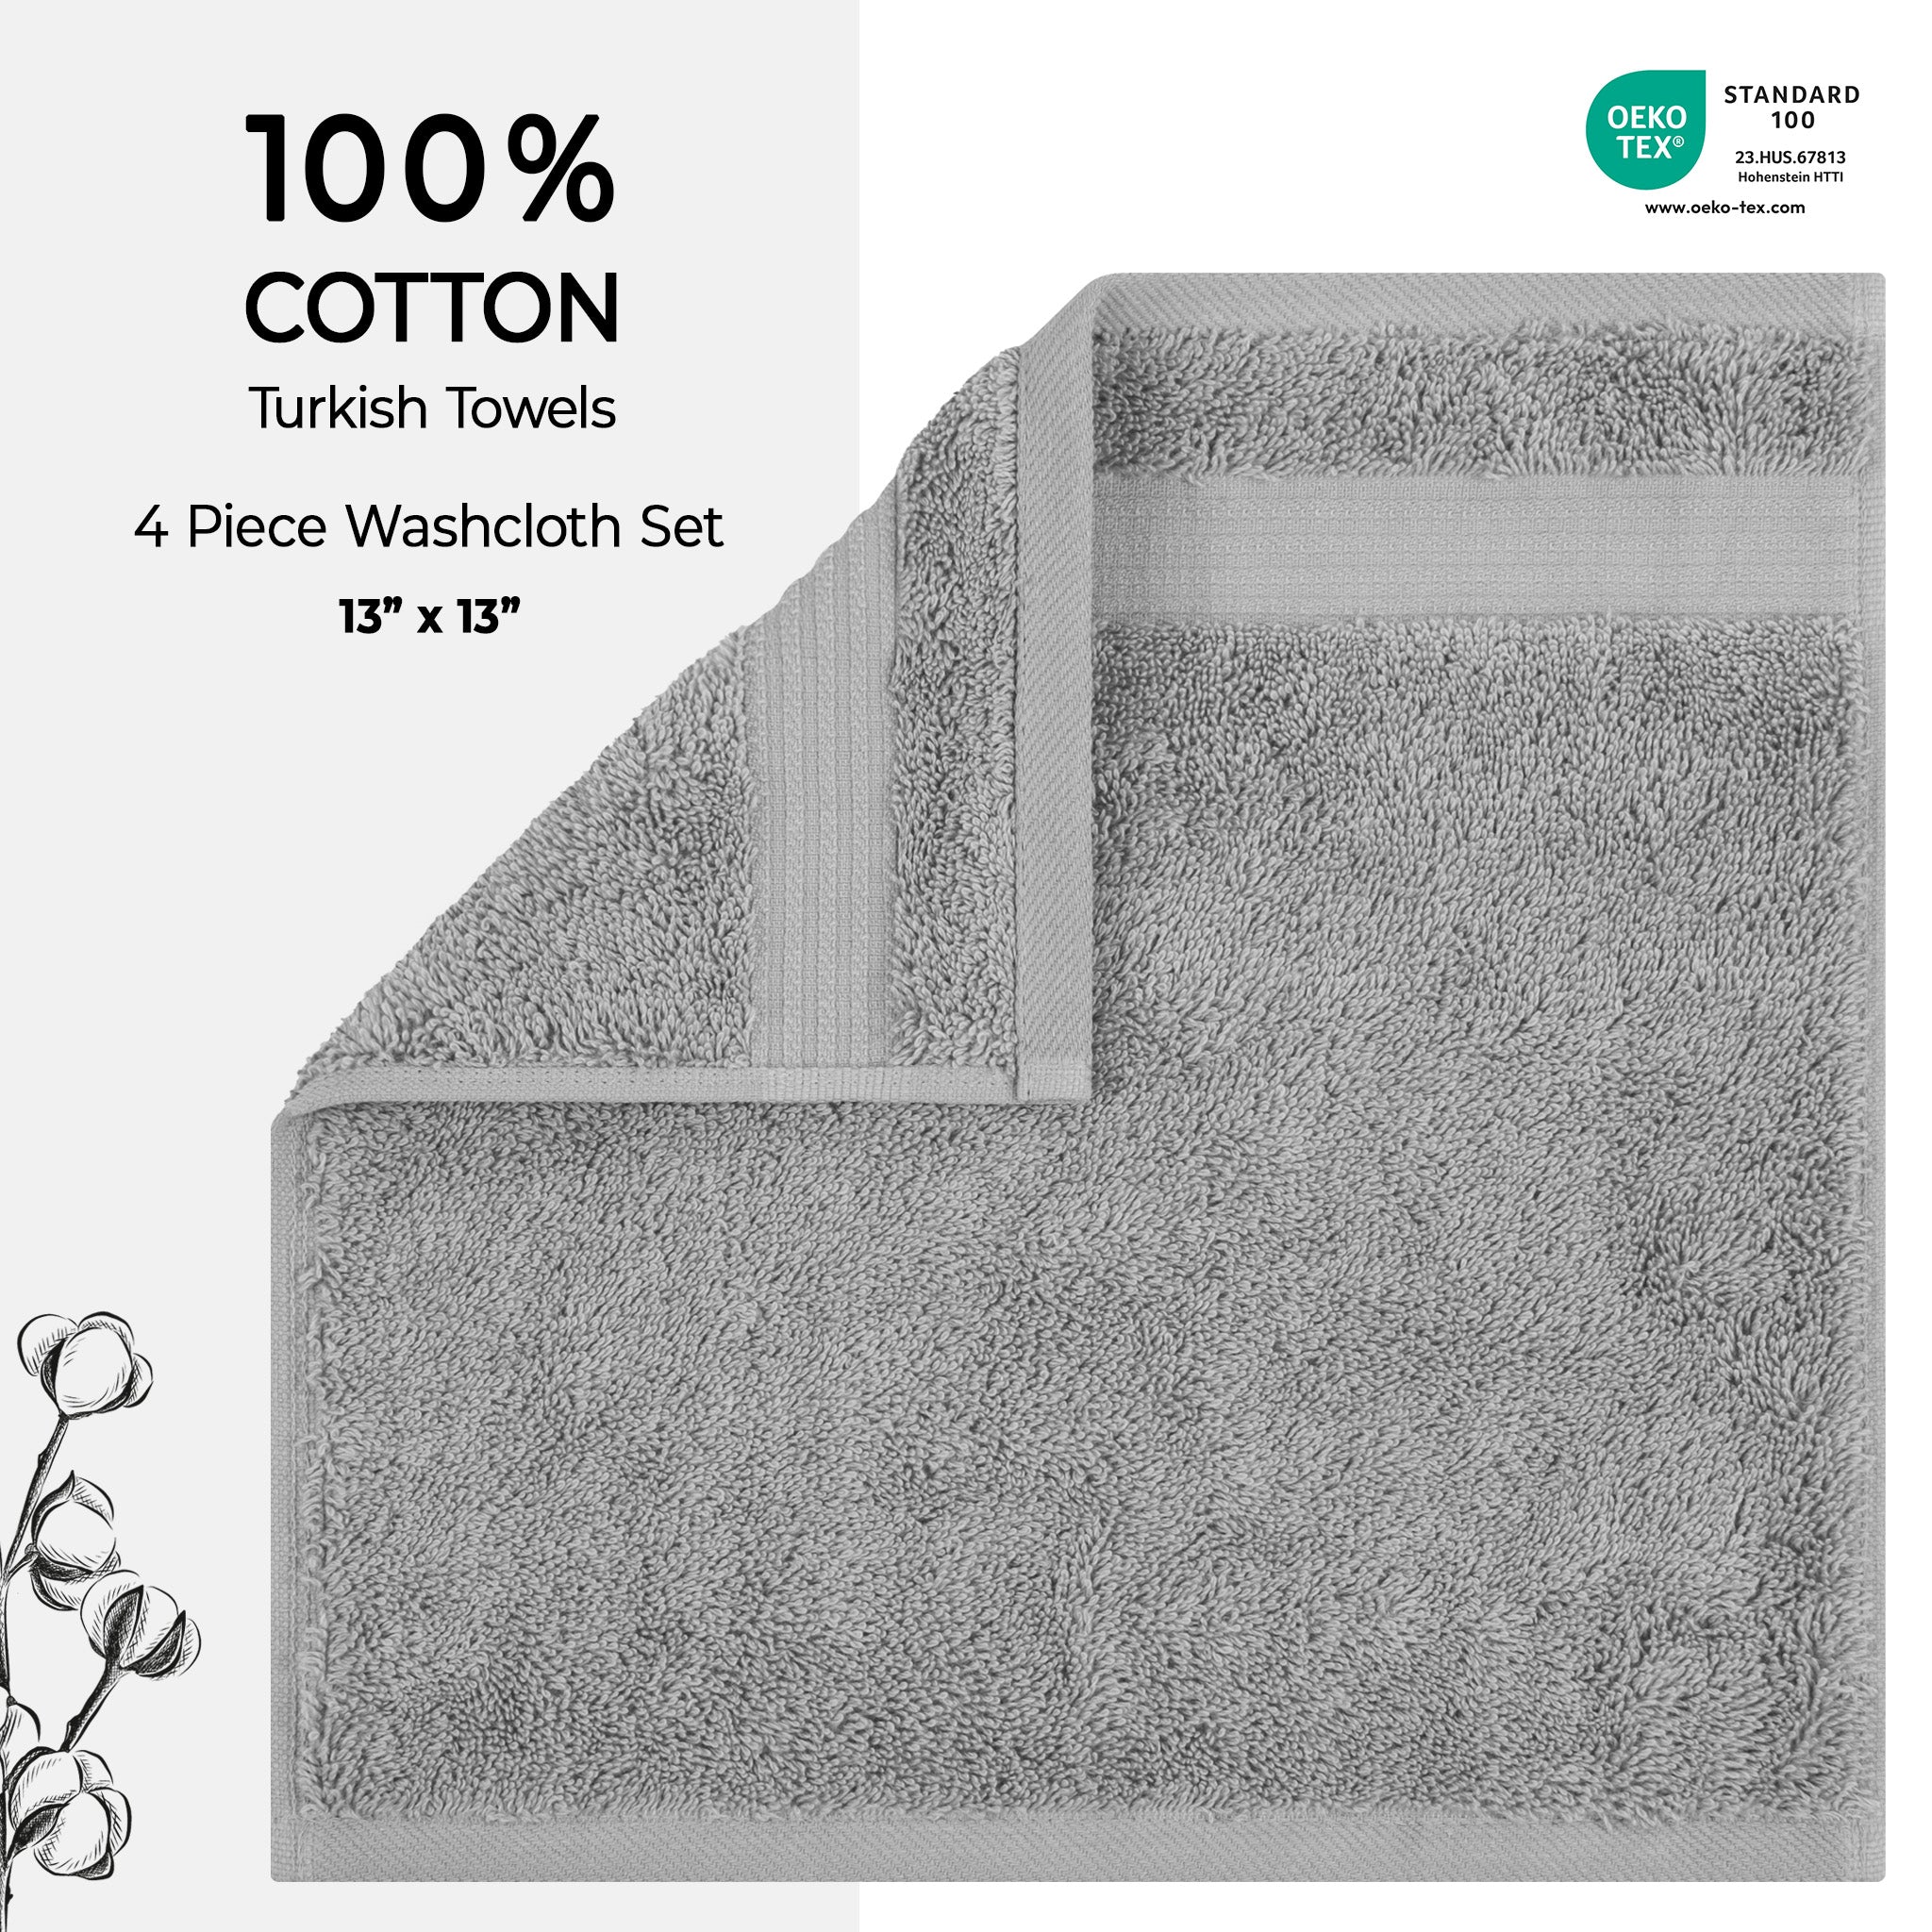 American Soft Linen Bekos 100% Cotton Turkish Towels, 4 Piece Washcloth Towel Set -rockridge-gray-02